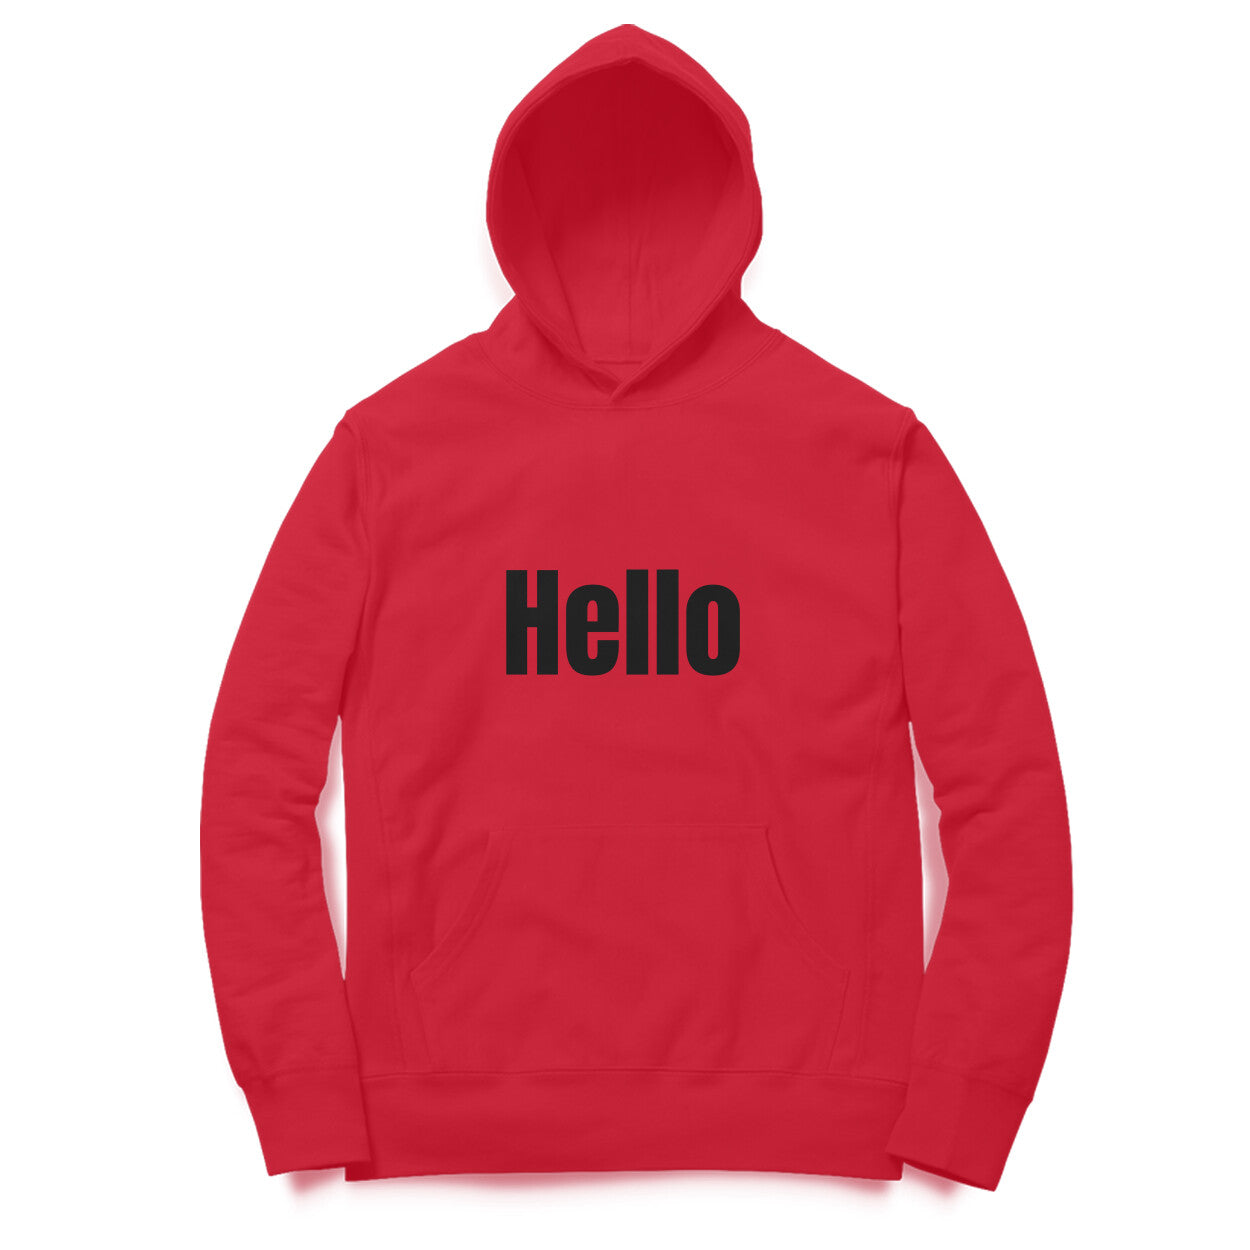 Hello' hoodie in dark font